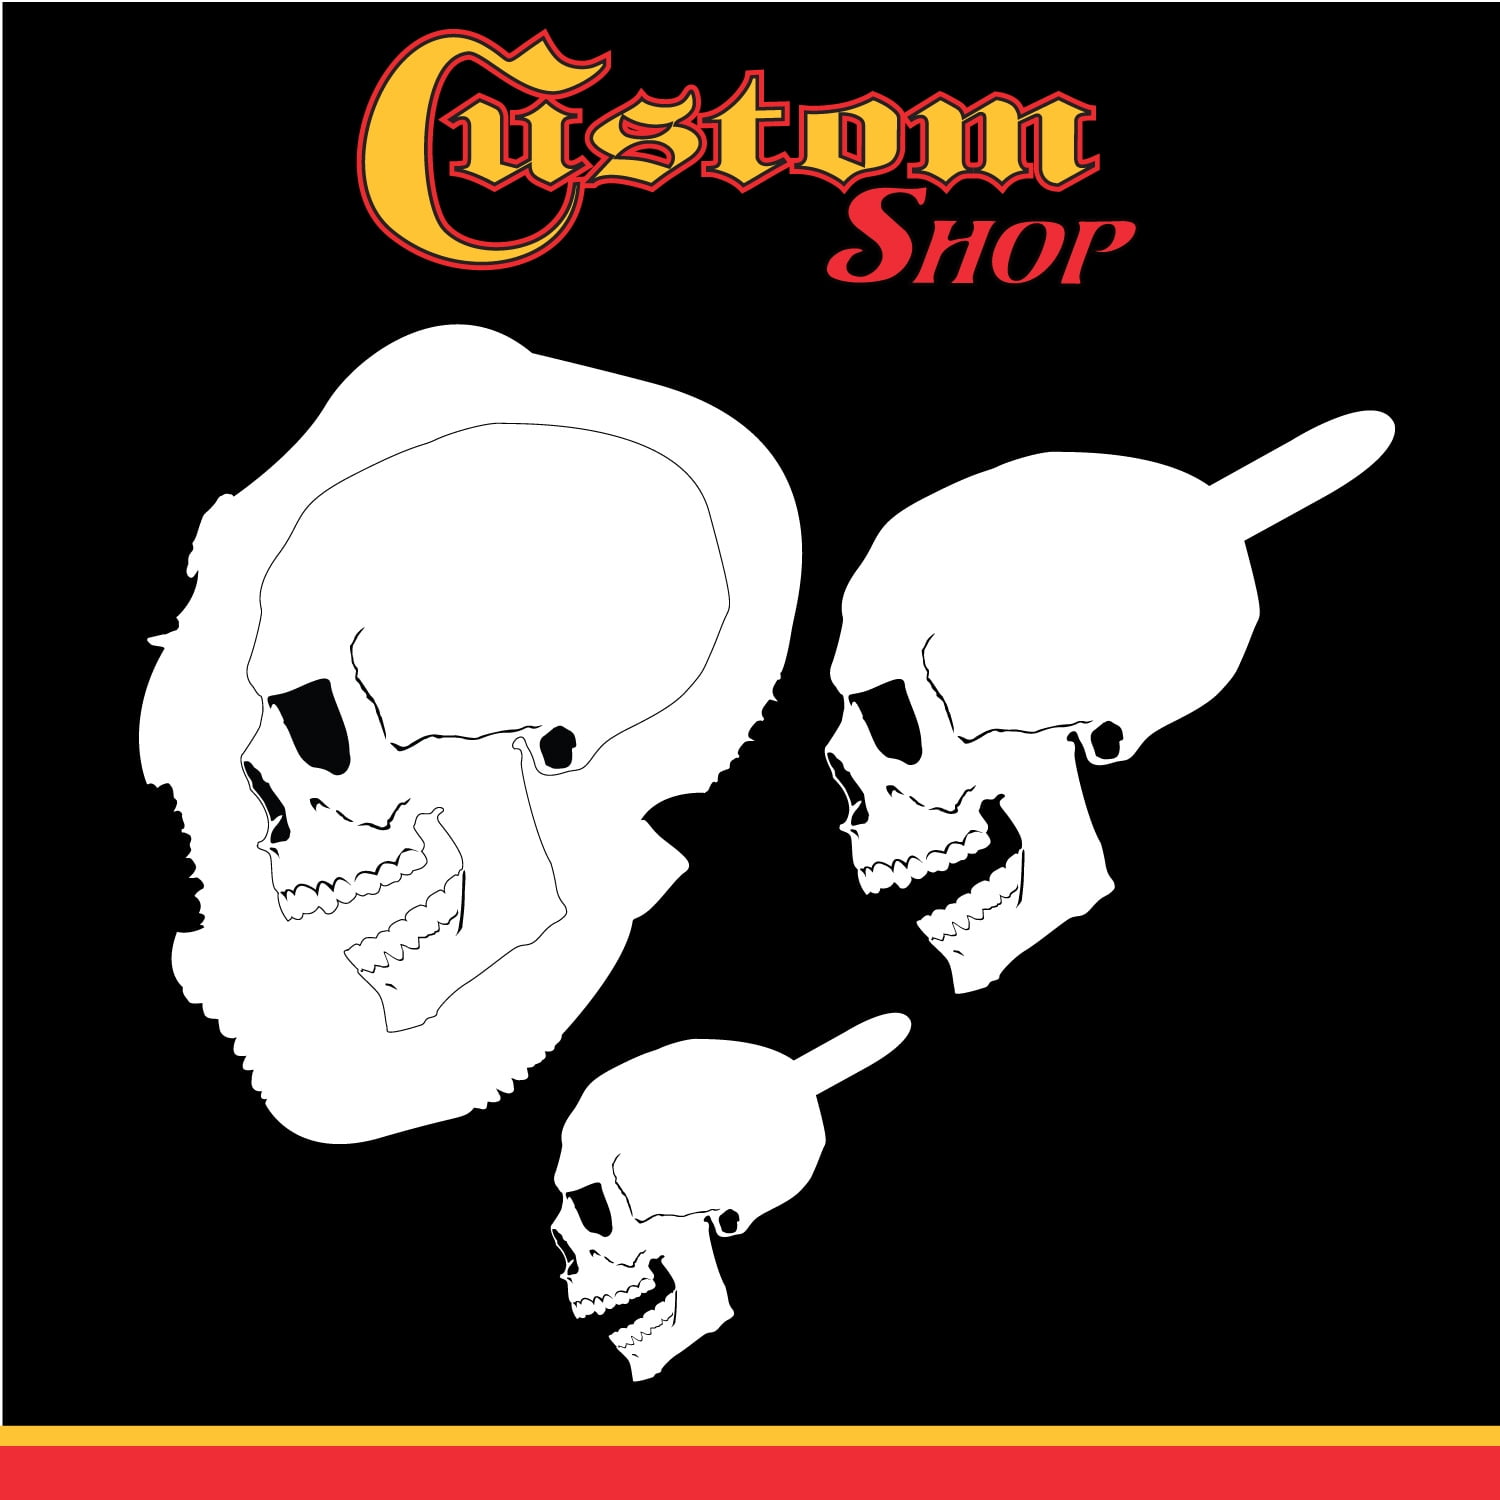 Custom Shop Airbrush Pile of Skulls Stencil Set Auto Motorcycle Graphic Art 3 Pack of Same Skull Design - Laser Cut Reusable Templates 